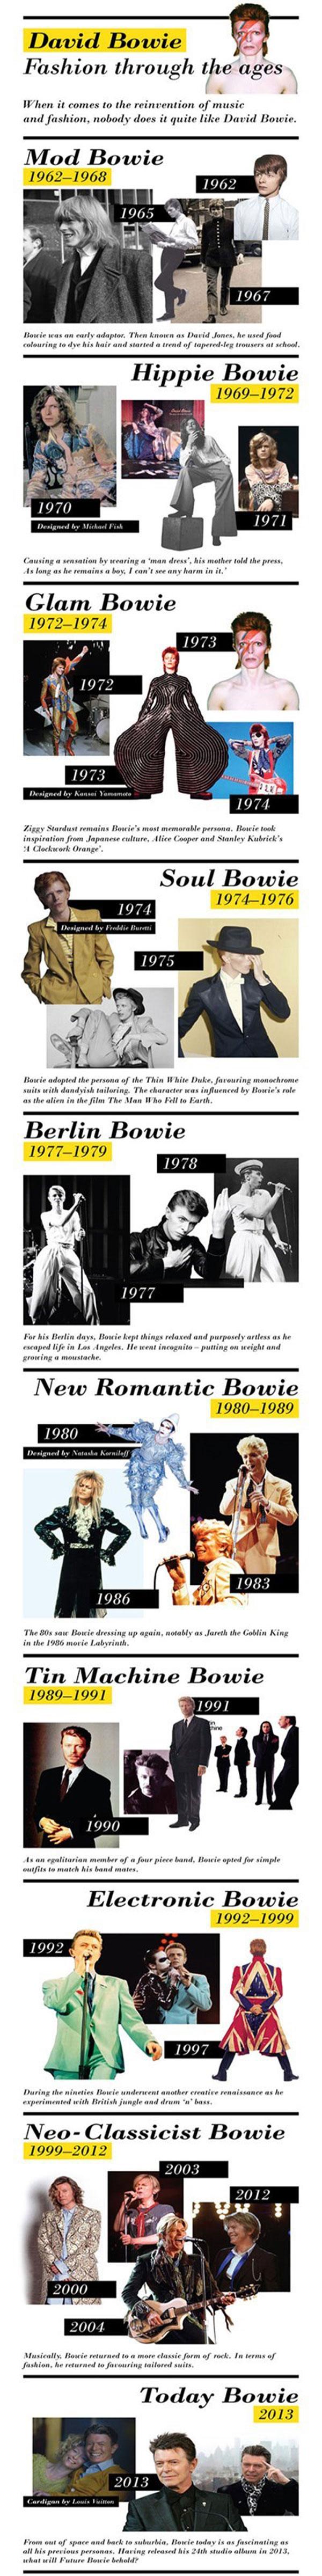 david bowie, fashion, music, through the years